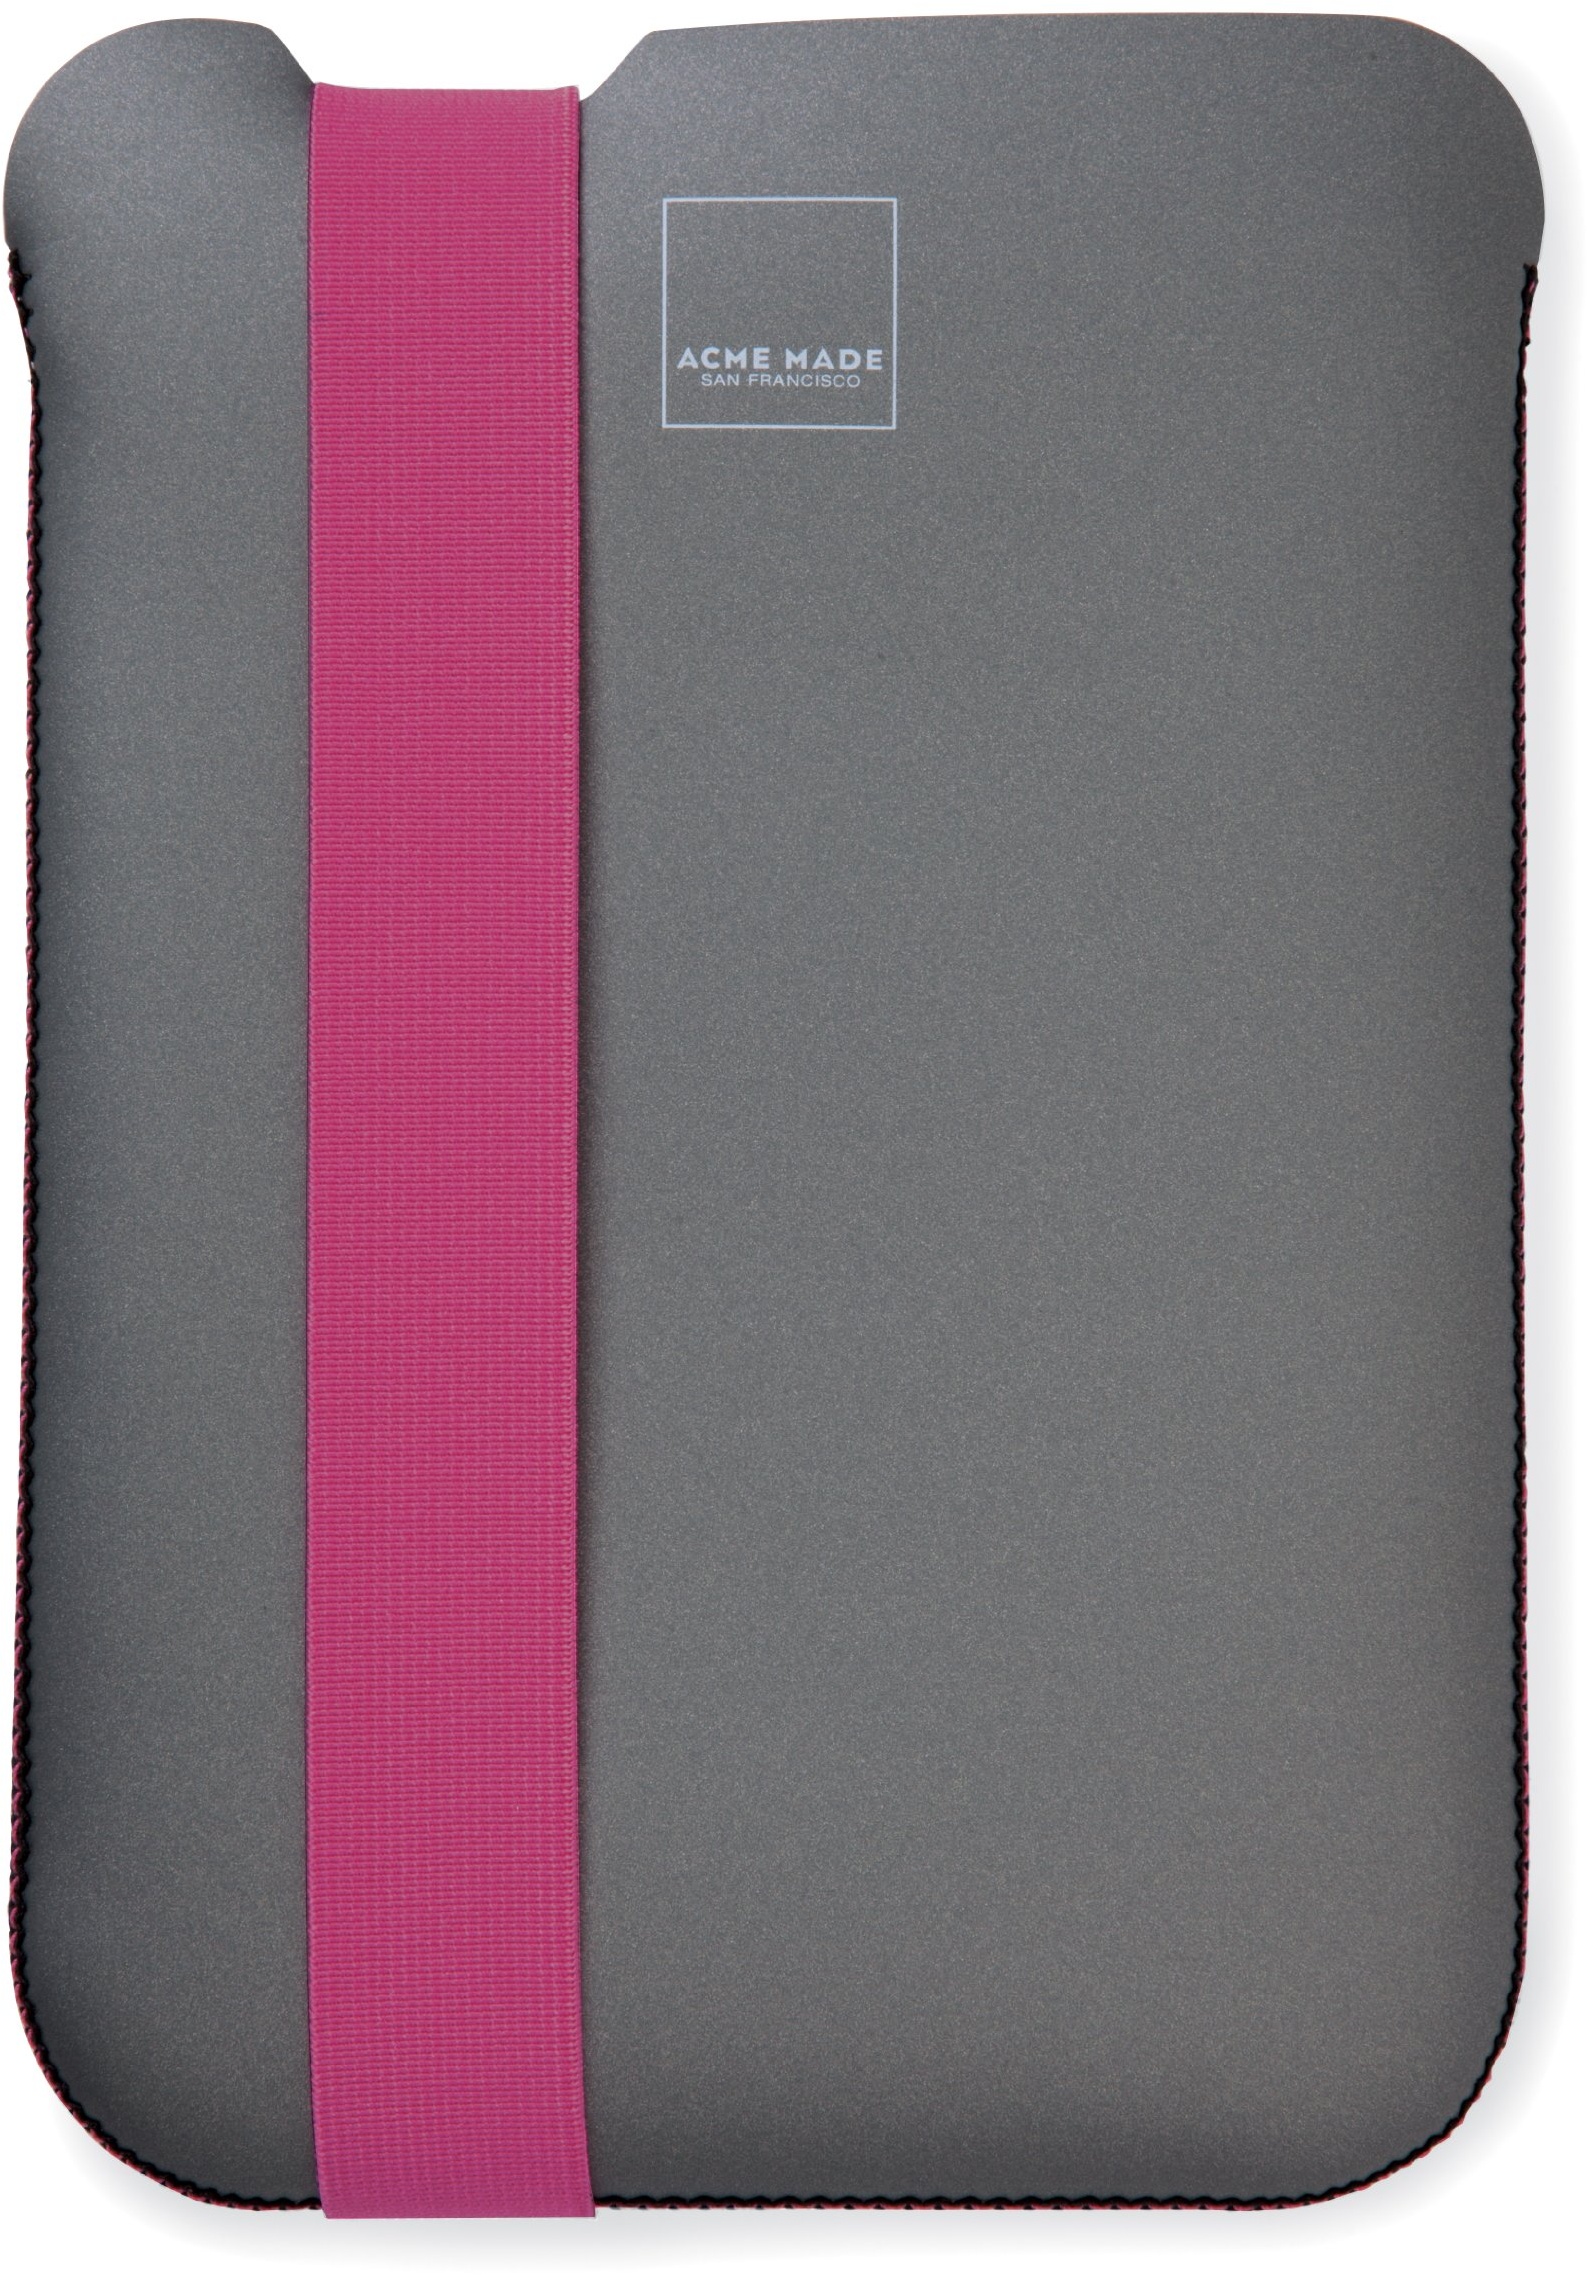 Acme Made AM36605-PWW Skinny Sleeve für Apple iPad Mini grau/pink